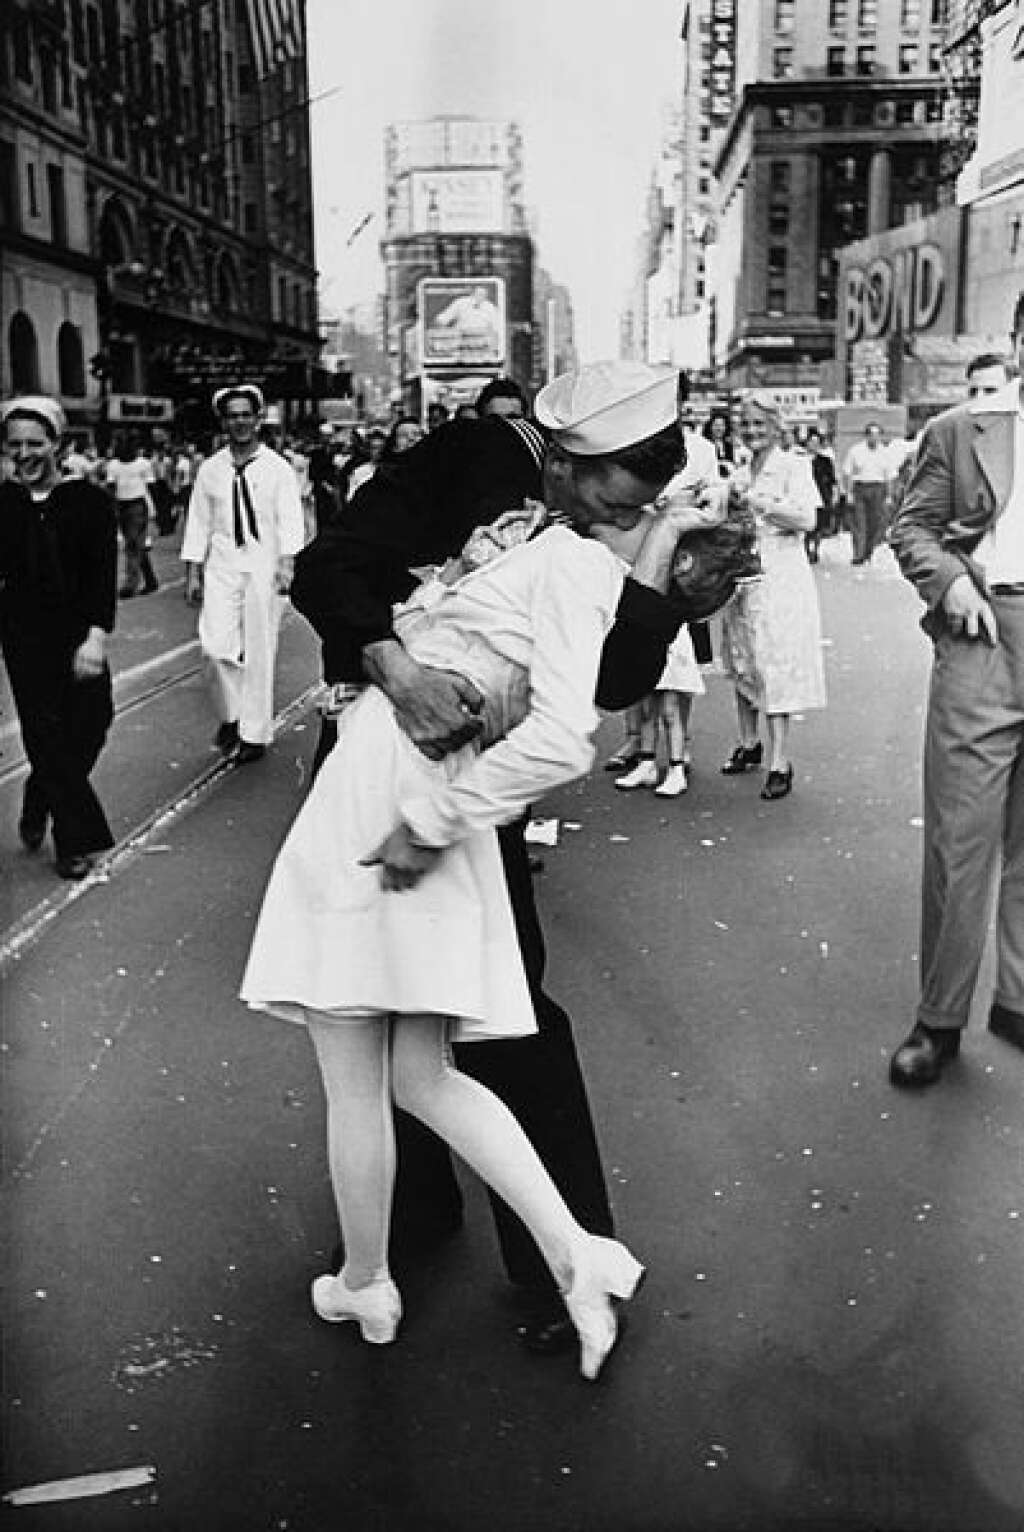 2- V-J Day in Times Square de Alfred Eisenstaedt (14 août 1945) - Qui serait en fait <a href="http://www.slate.fr/lien/62821/photo-celebre-times-square-marin-embrasse-infirmiere-agression-sexuelle">une agression sexuelle</a>...  <a href="http://en.wikipedia.org/wiki/V-J_Day_in_Times_Square">Explication de la photo d'Alfred Eisenstaedt</a>